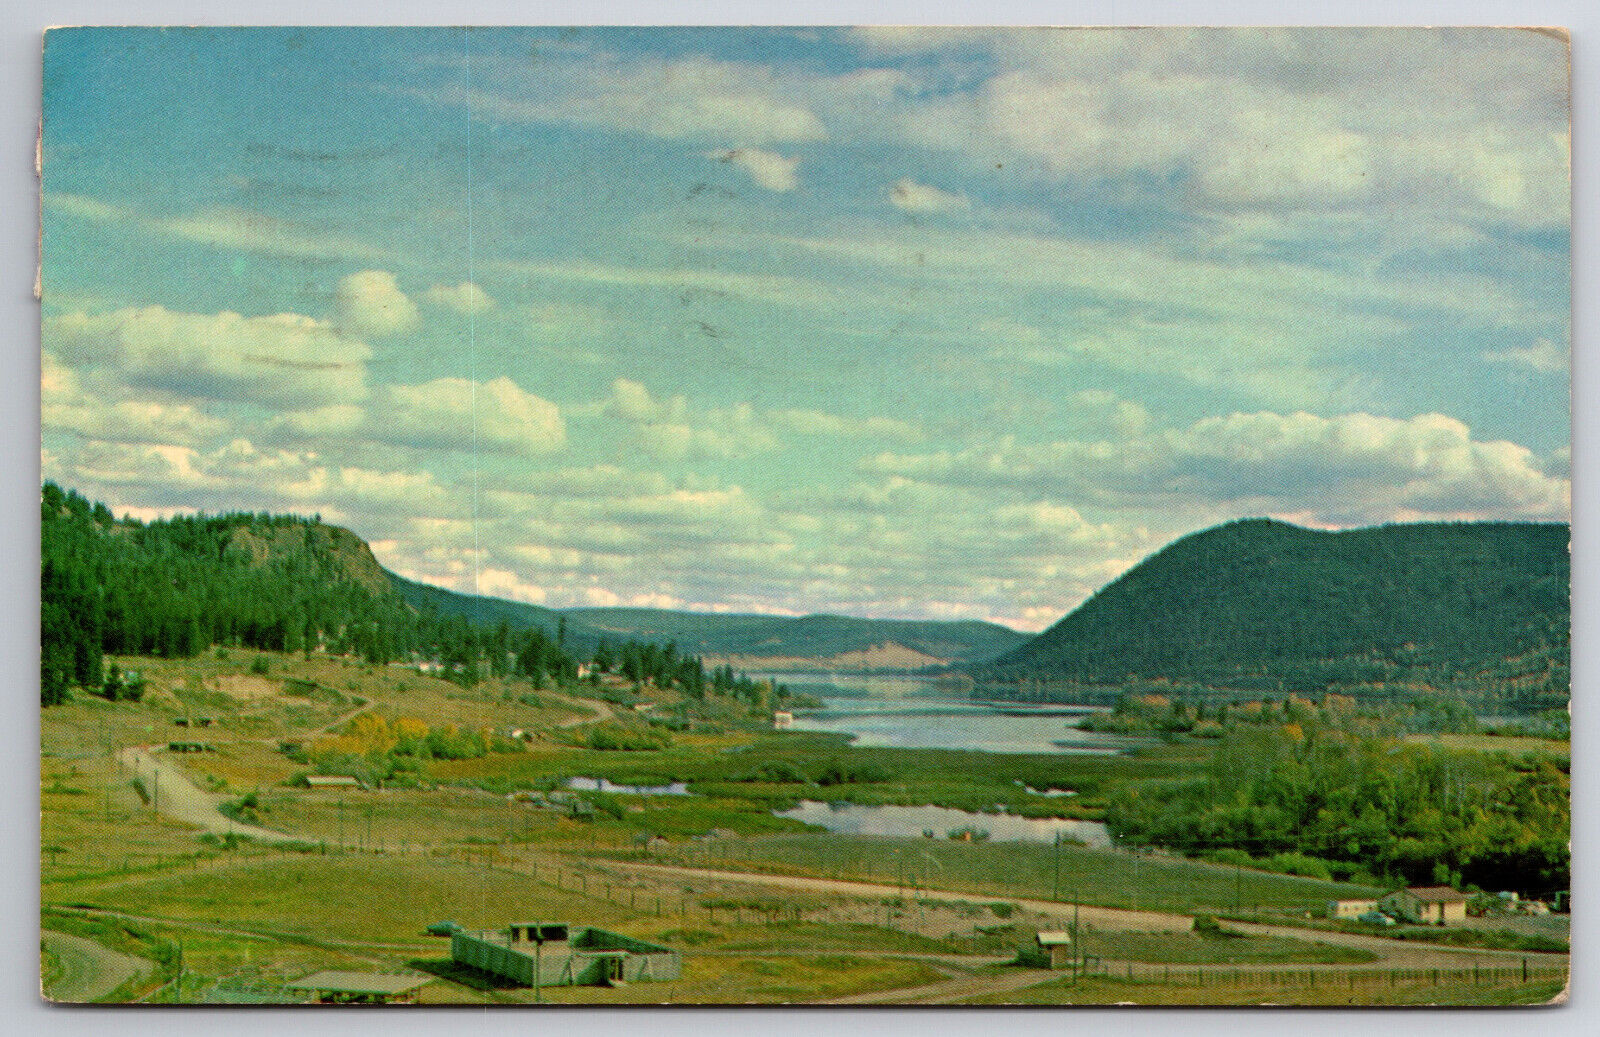 Vintage Canada Postcard Williams Lake B.C. Posted Jun. 29, 1964